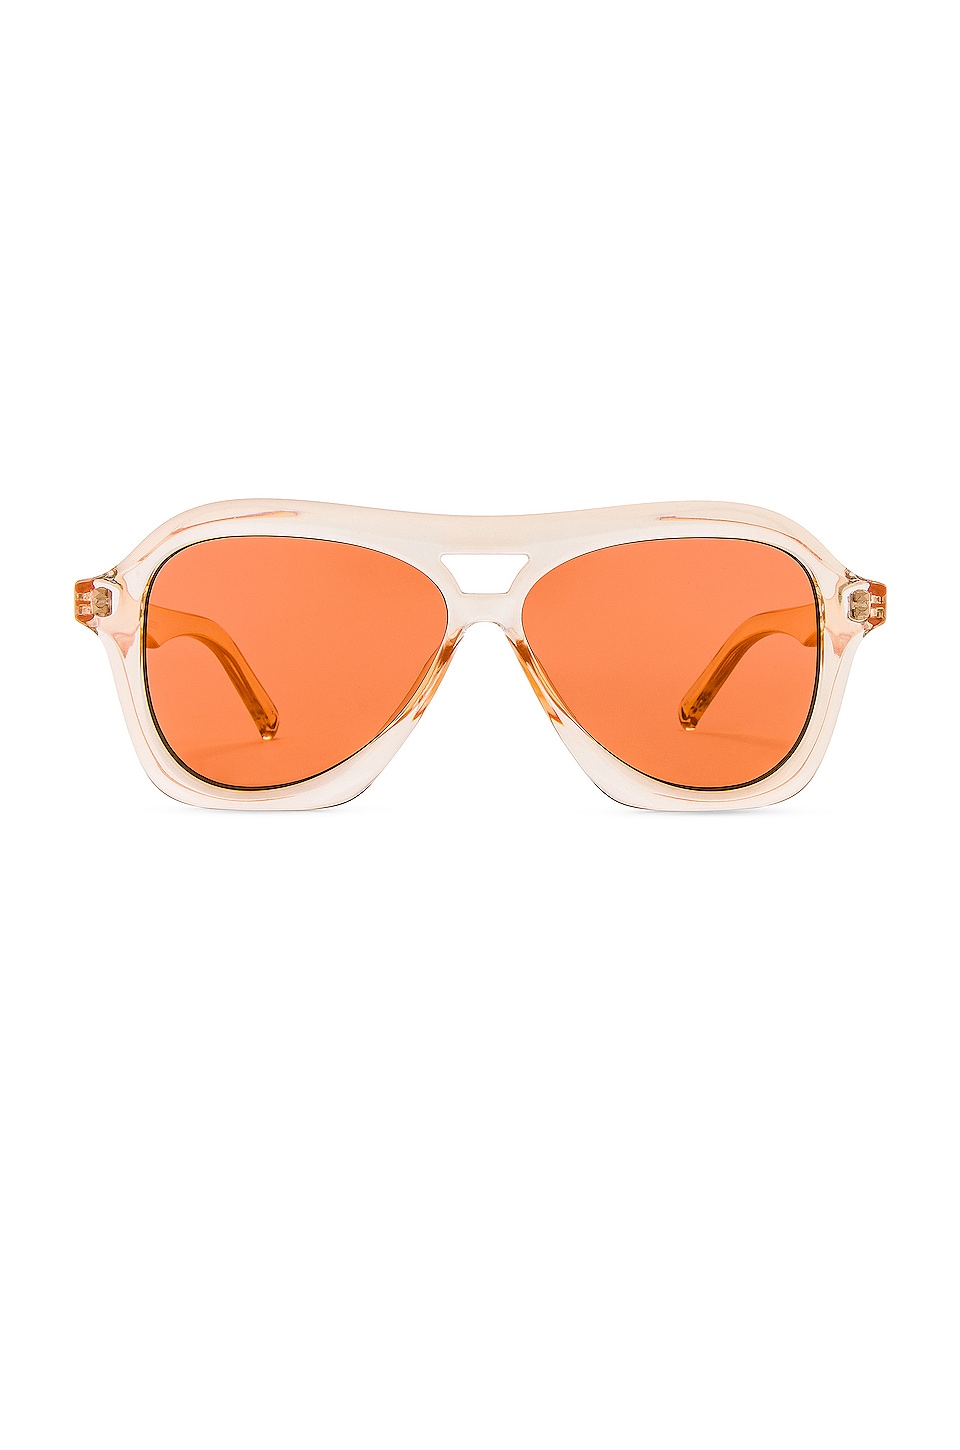 Le Specs Drizzle Limited Edition Sunglasses in Nougat | REVOLVE